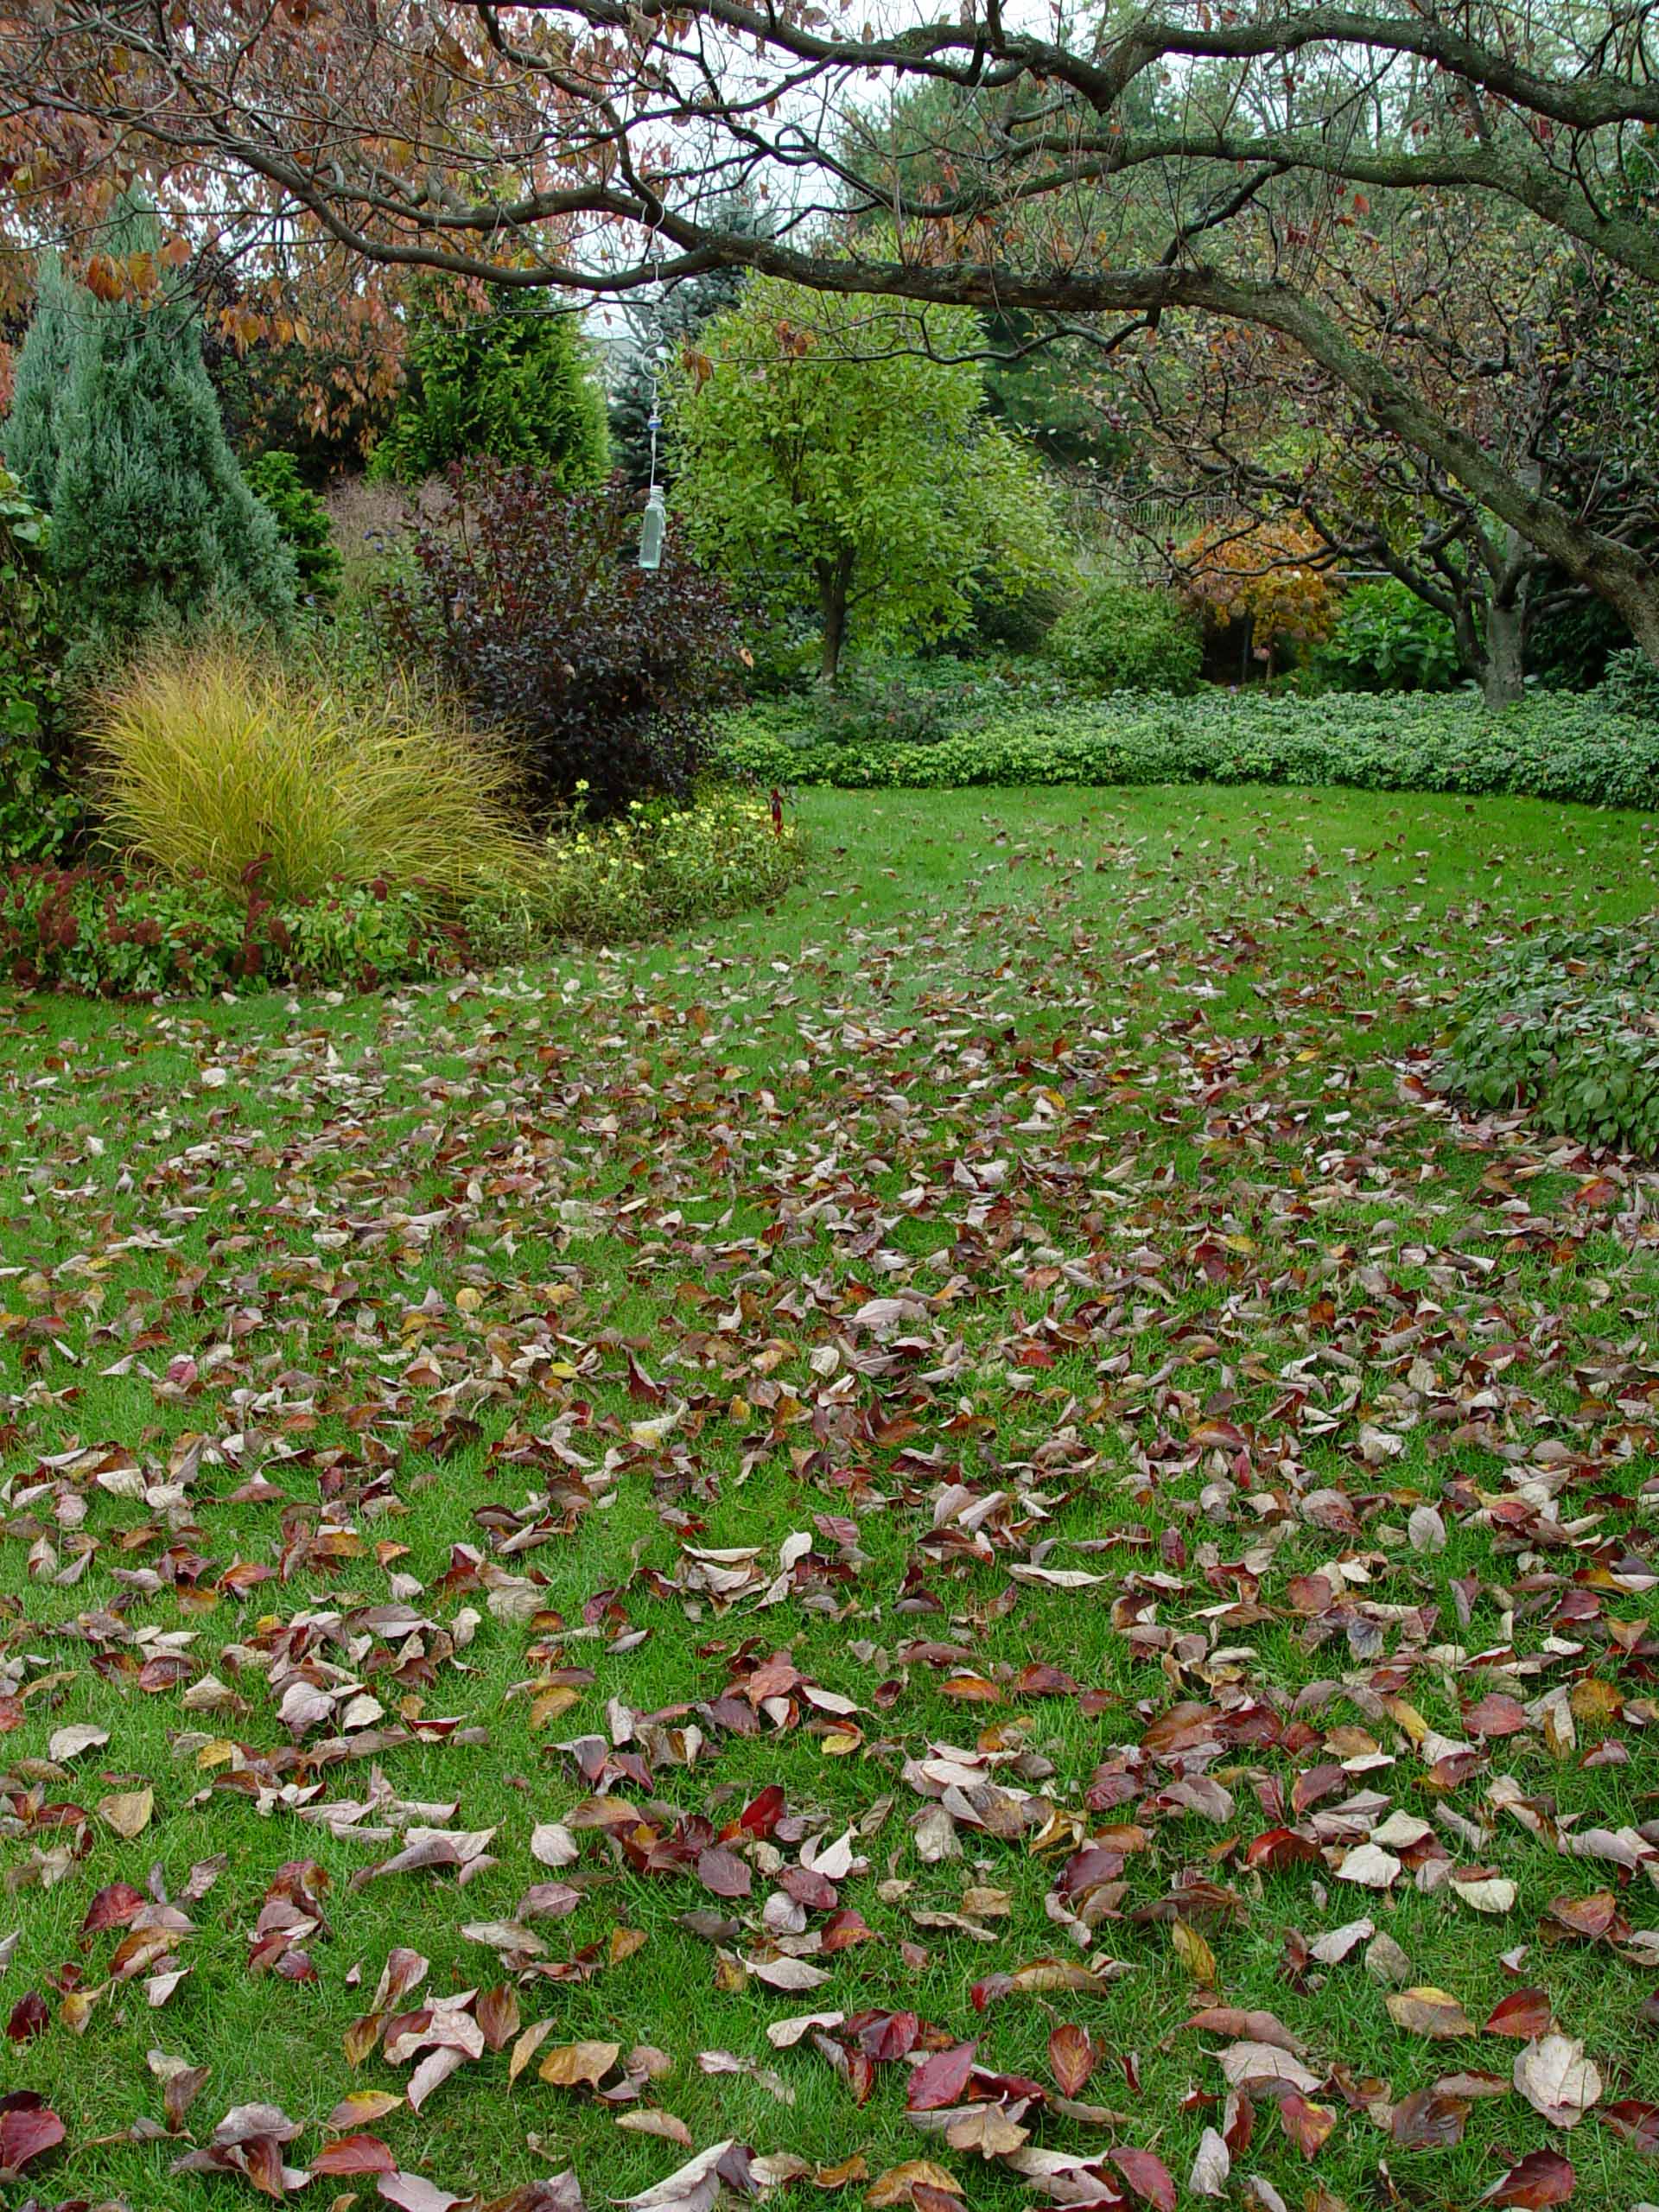 Garden Housecalls - The Great Fall Leaf (Leaf Fall?) Debate